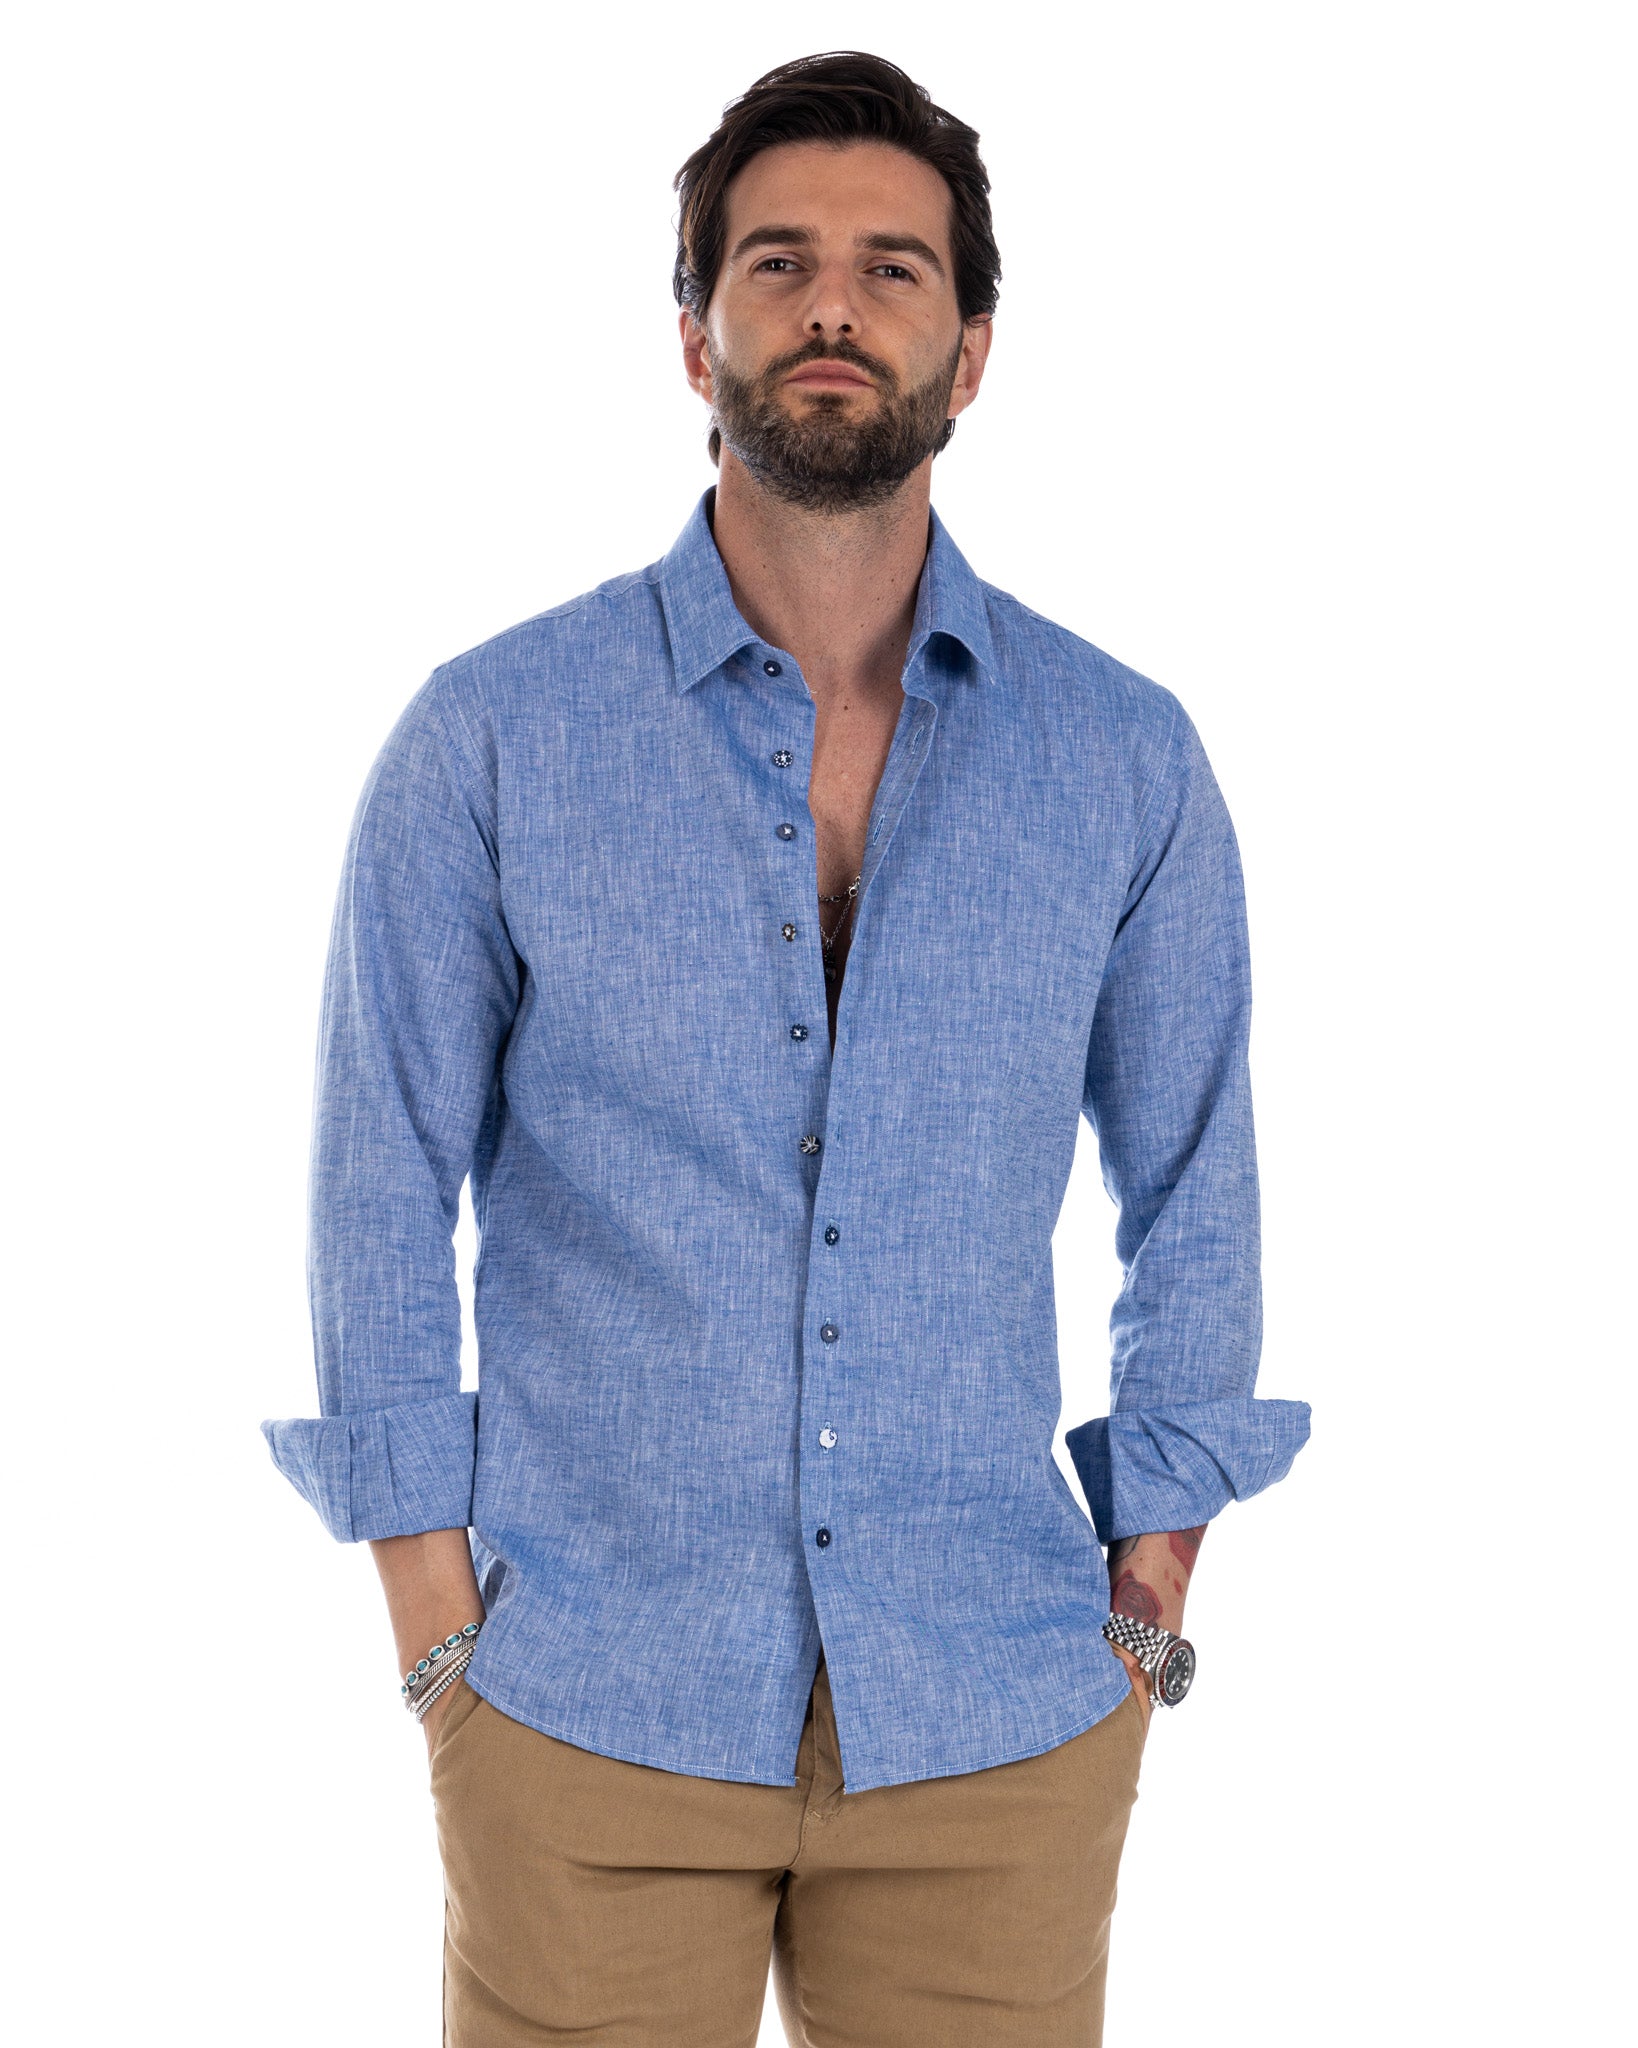 Praiano - French denim linen shirt